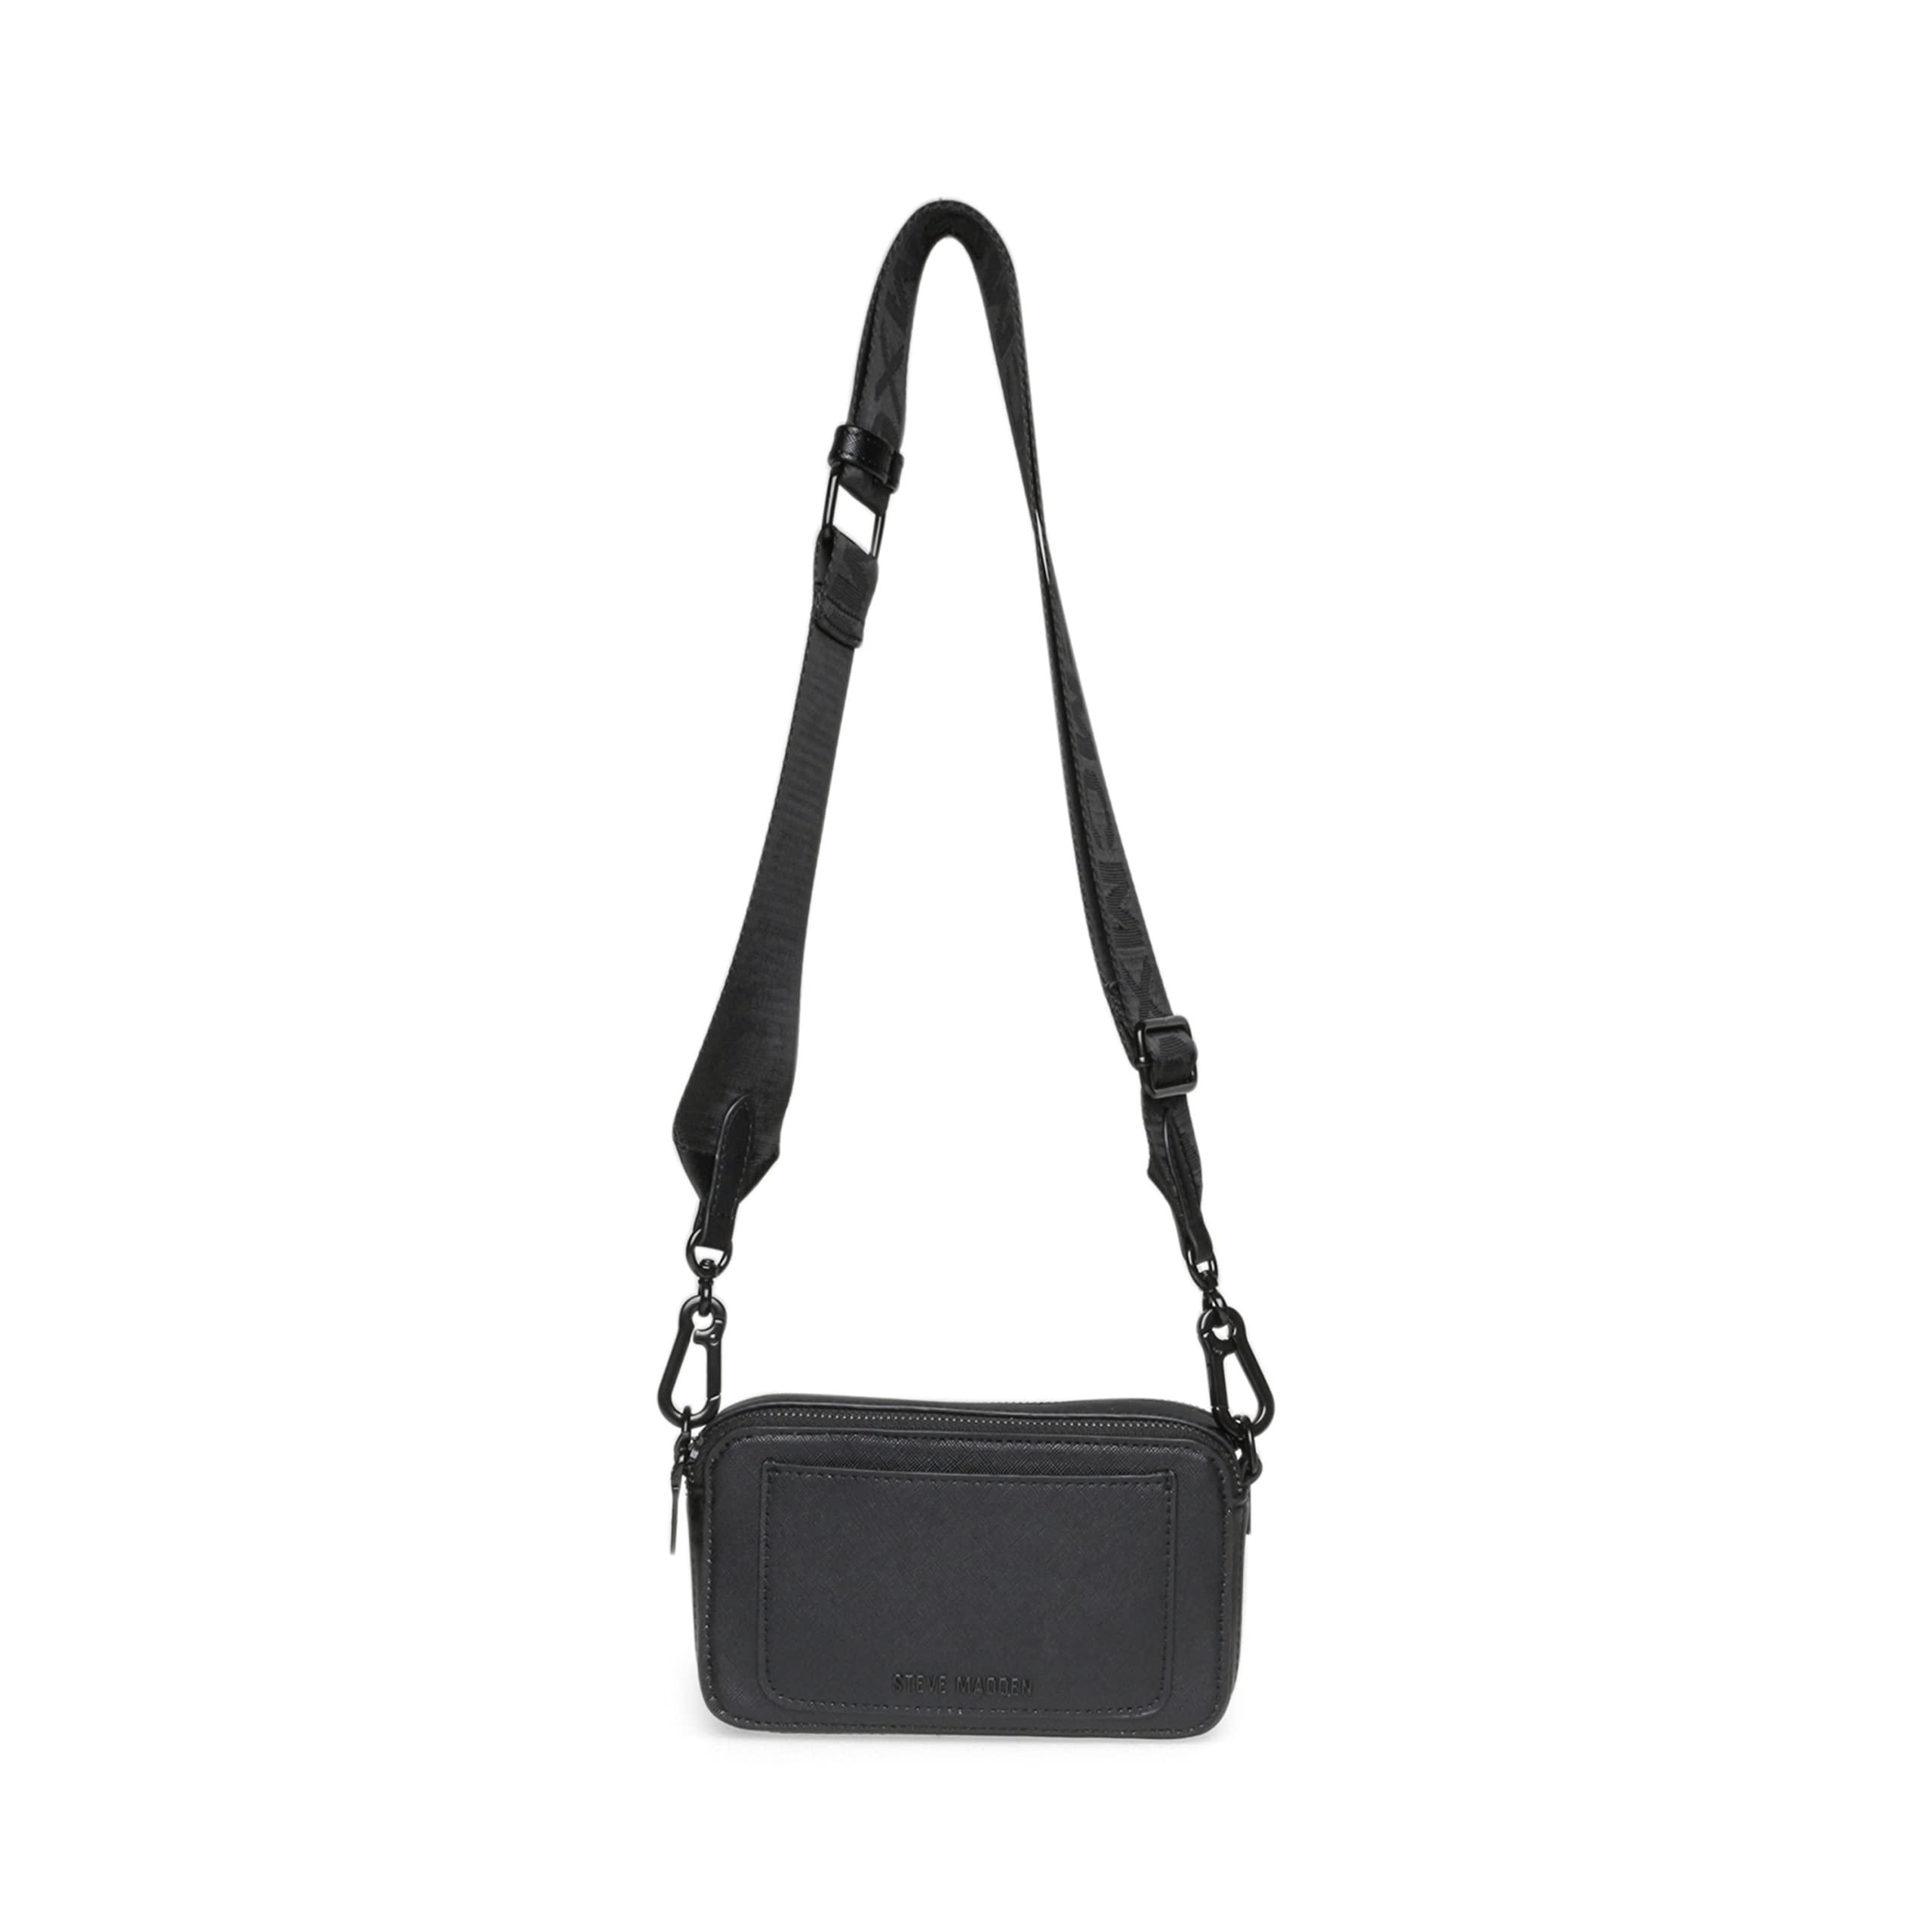 STEVE MADDEN Black Nylon Crossbody Mini Bag Purse Adjust. Detachable Strap  Zip